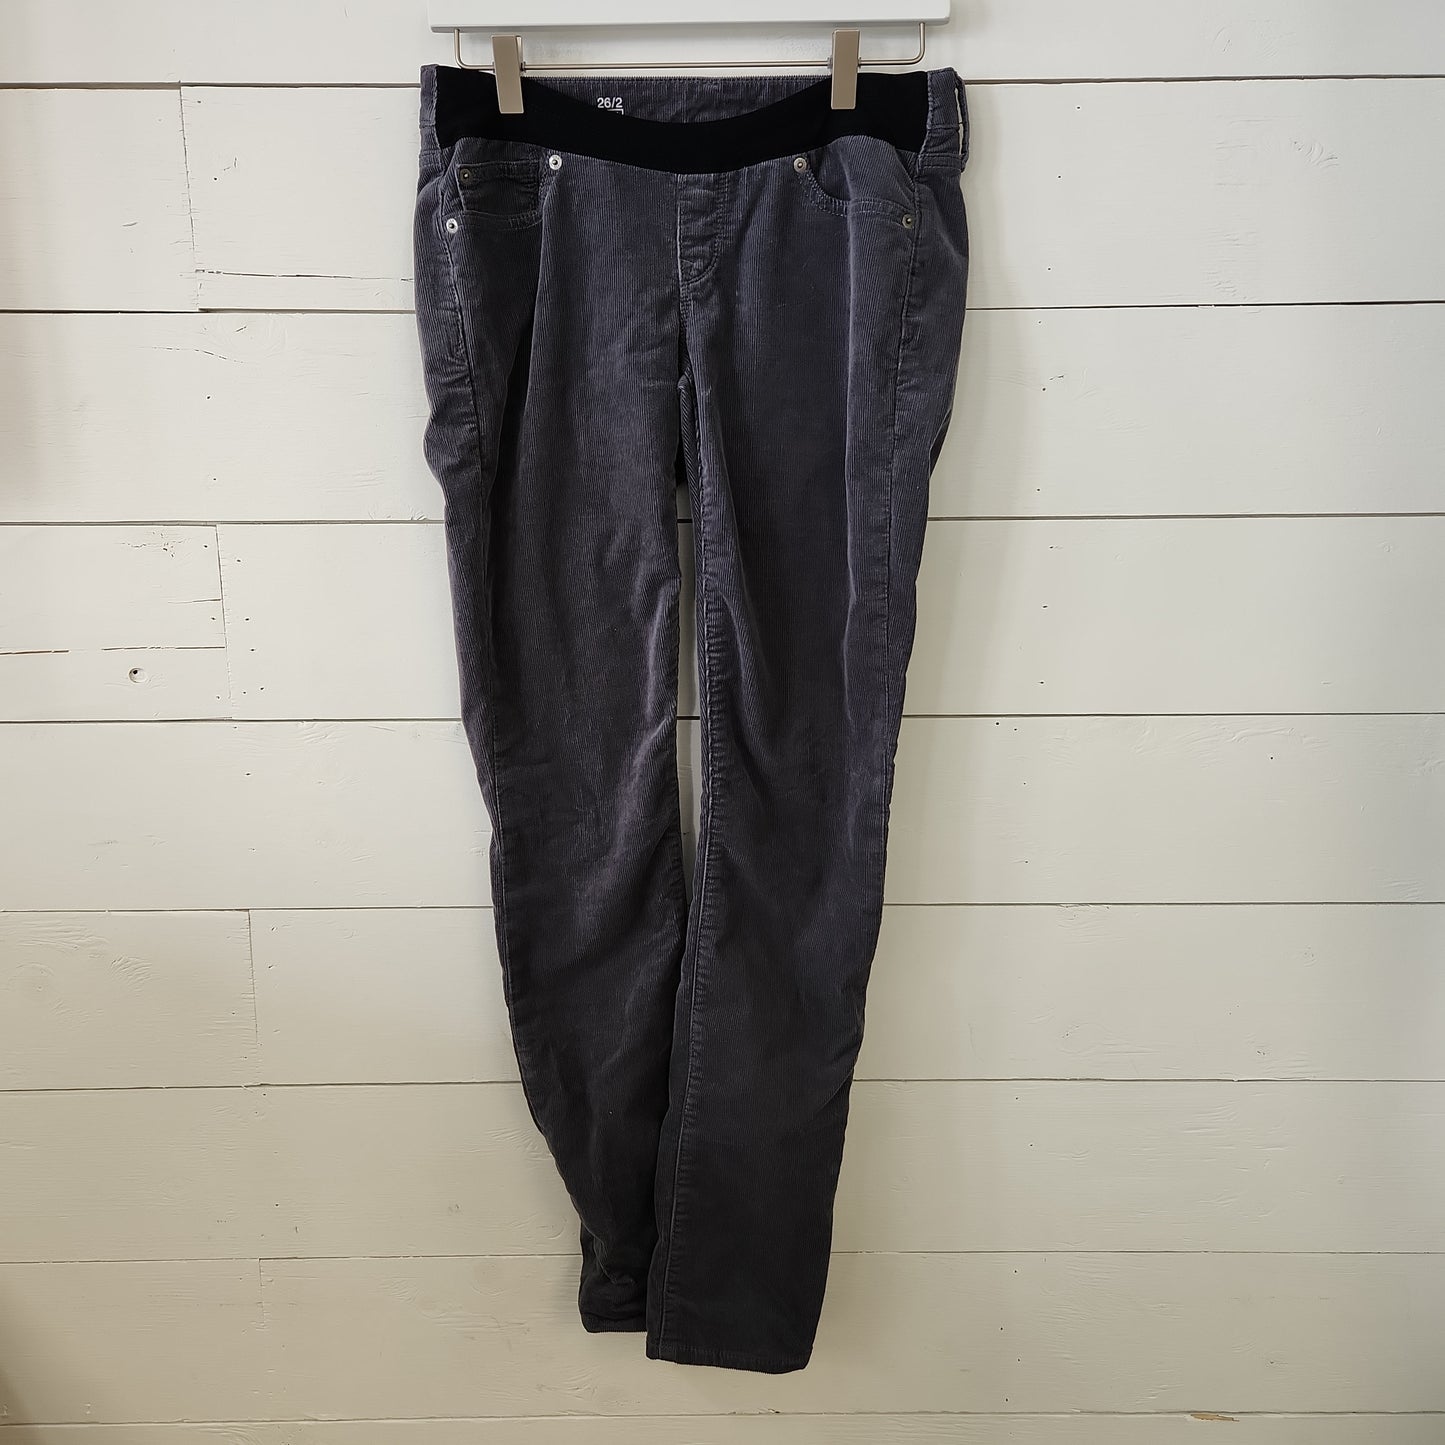 Size 26/2 | Gap Maternity Corduroy Pants | Secondhand